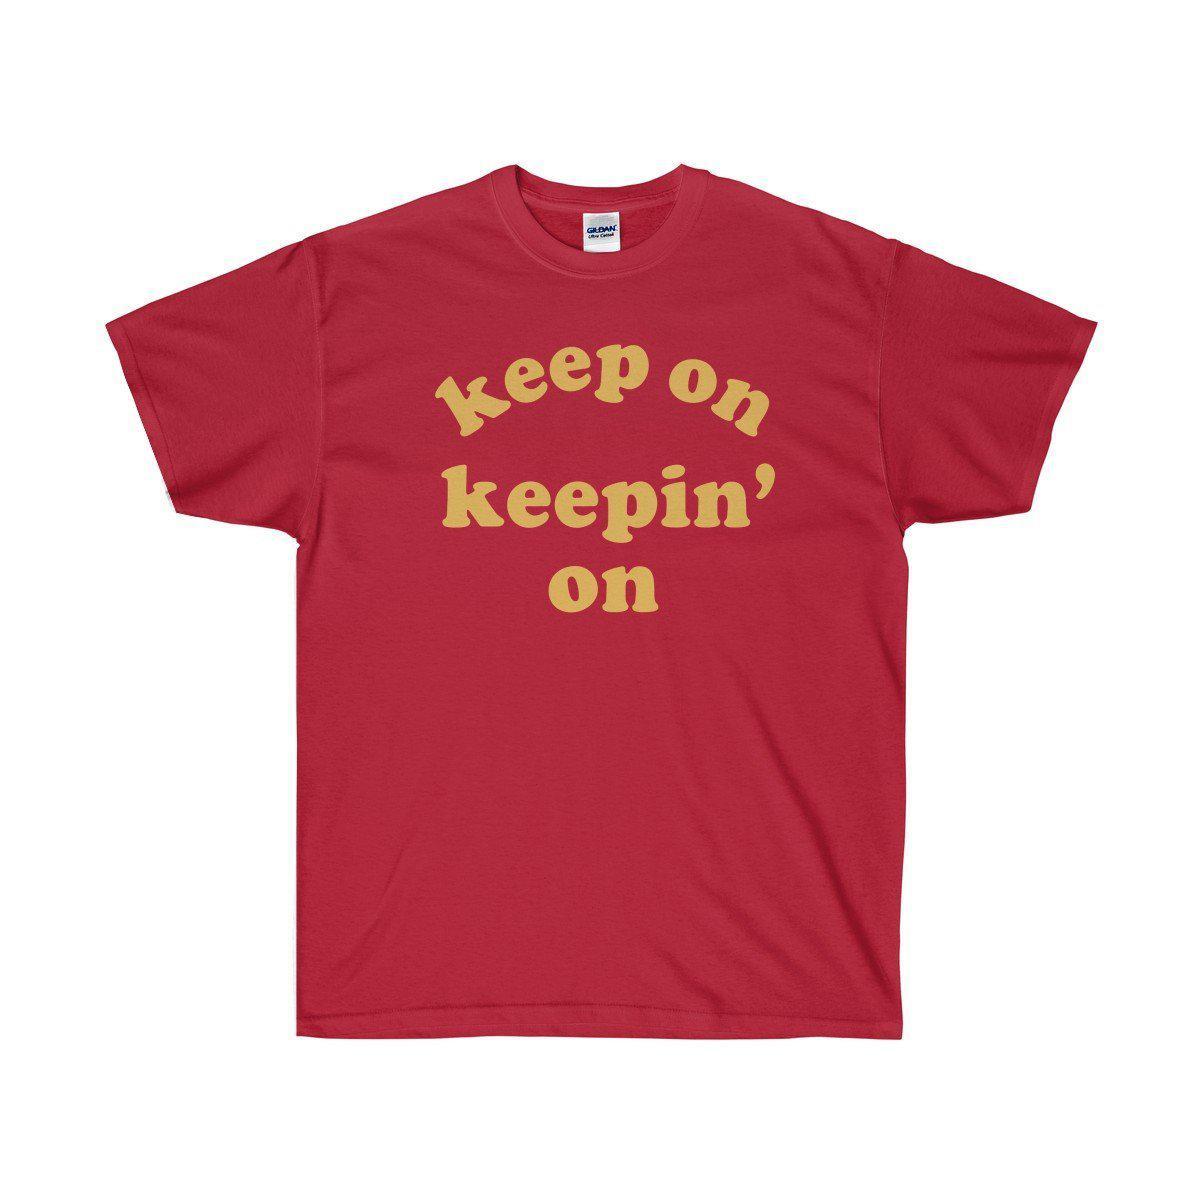 Keep On Keepin' On Tee - Atlanta Childish Gambino TV Show Earn Inspired-Cardinal Red-S-Archethype